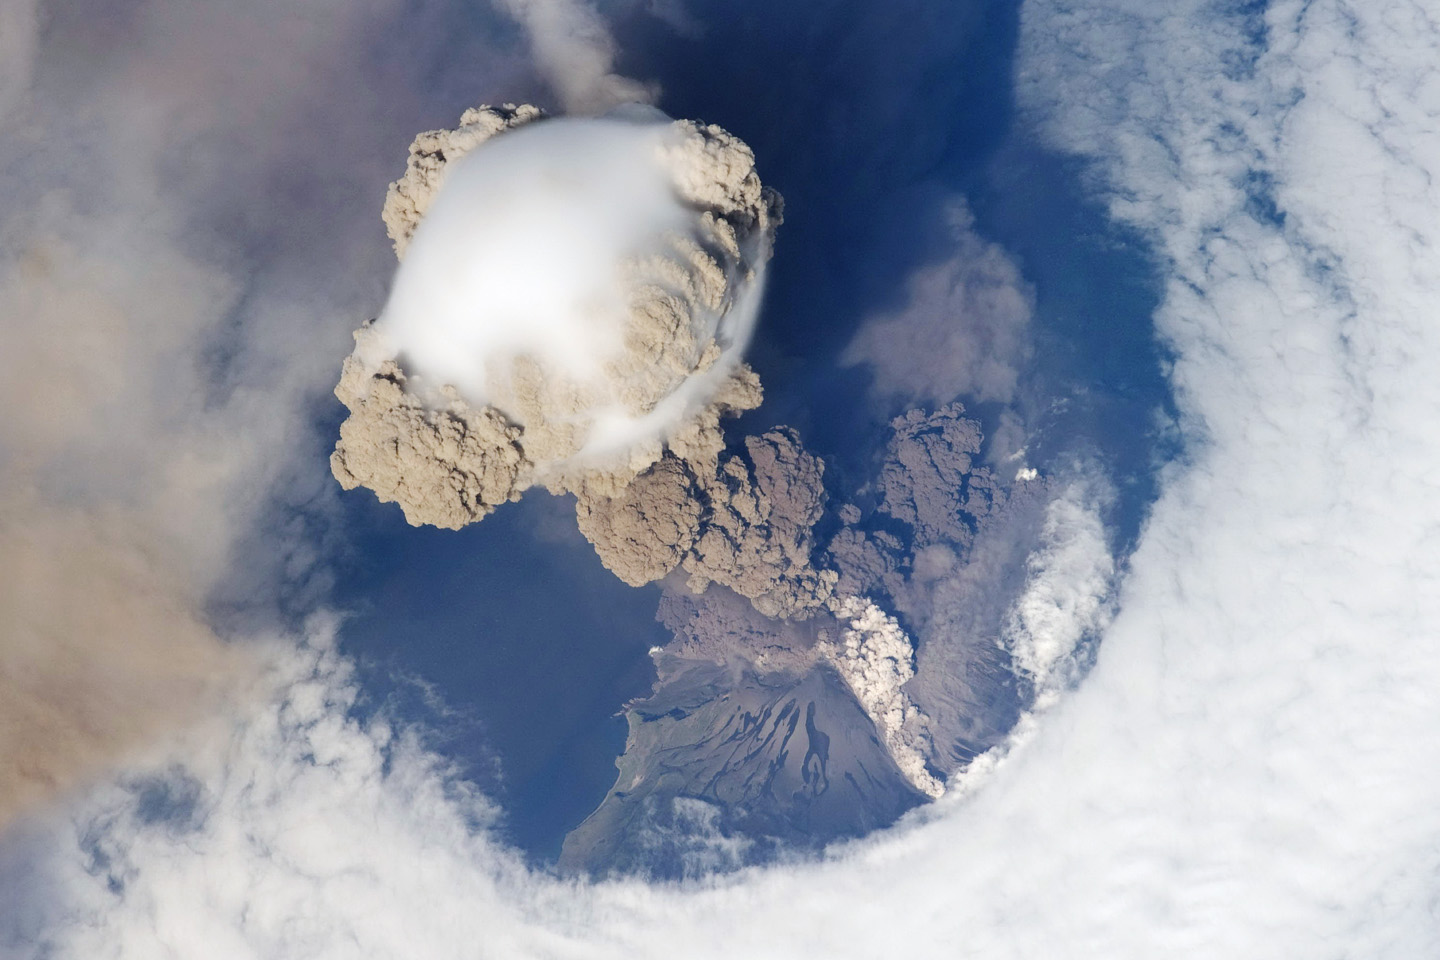 The Sarychev volcano